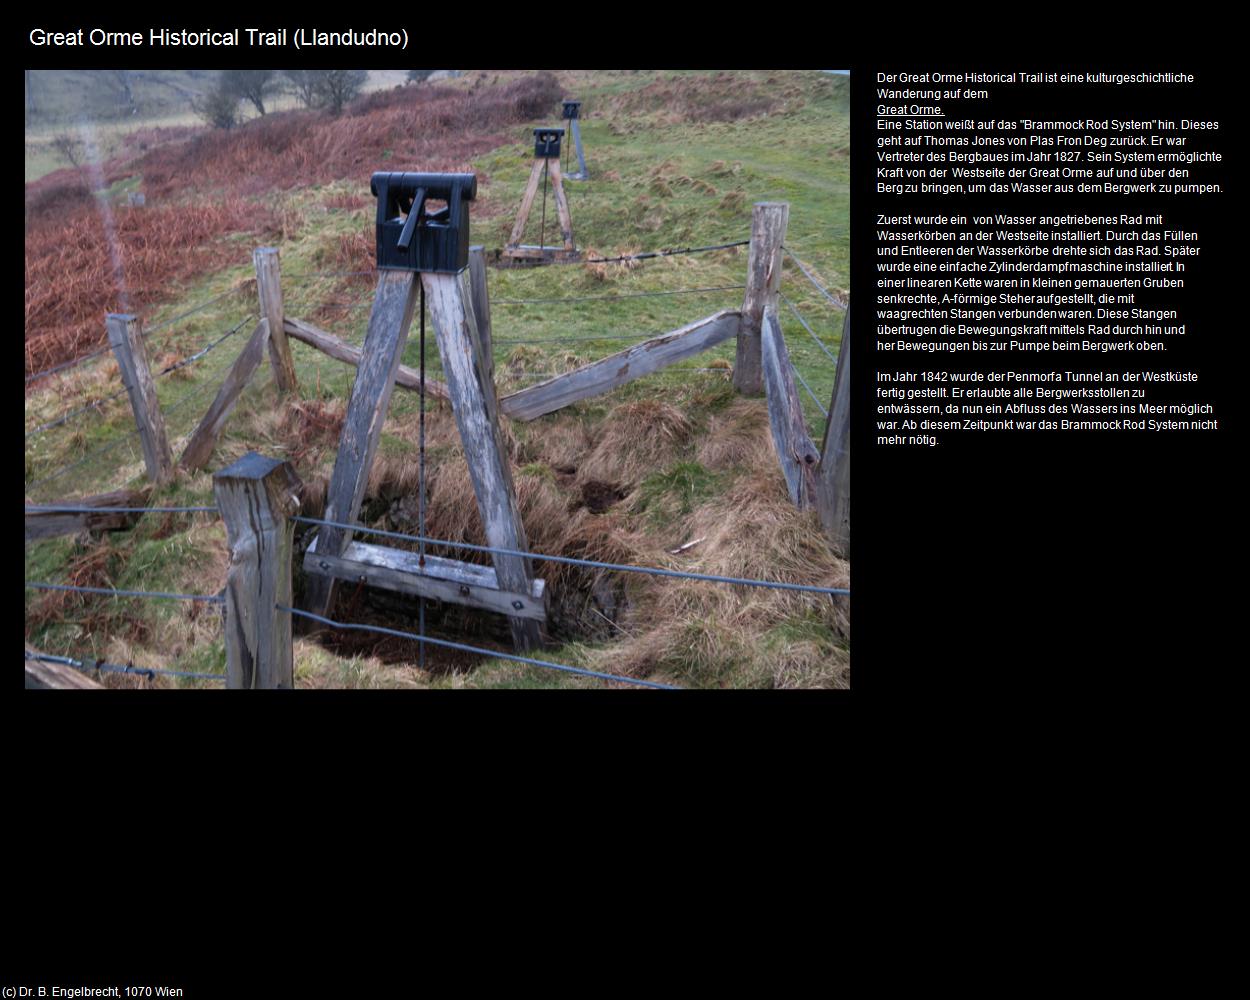 Great Orme Historical Trail  (Llandudno, Wales) in Kulturatlas-ENGLAND und WALES(c)B.Engelbrecht